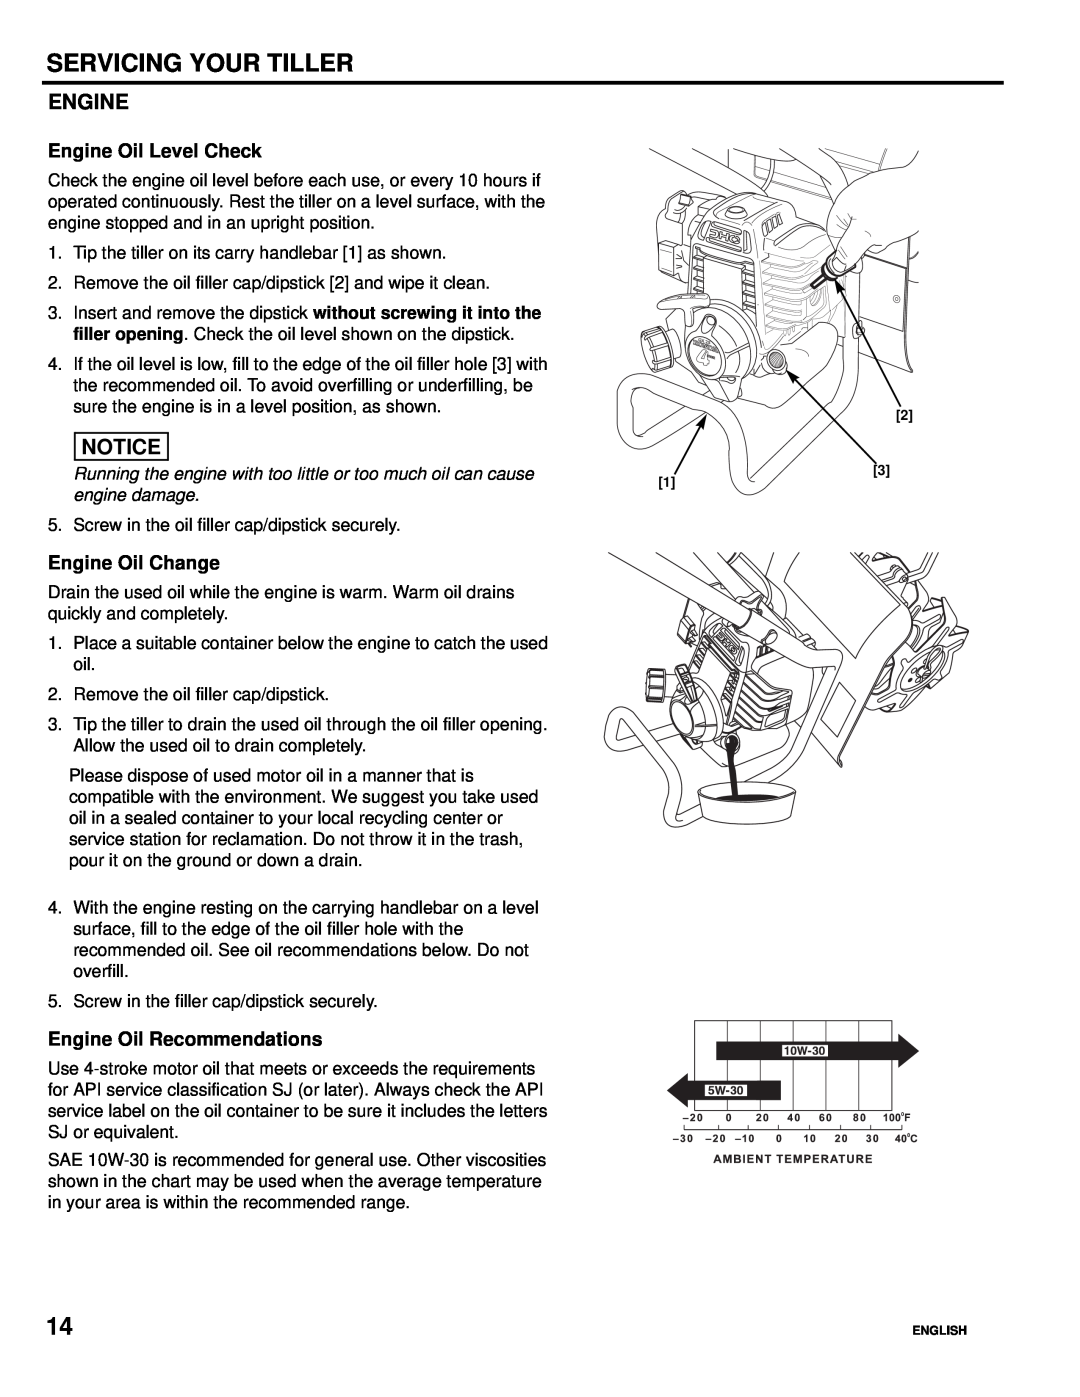 Honda Power Equipment FG110 Engine Oil Level Check, Engine Oil Change, Engine Oil Recommendations, engine damage 